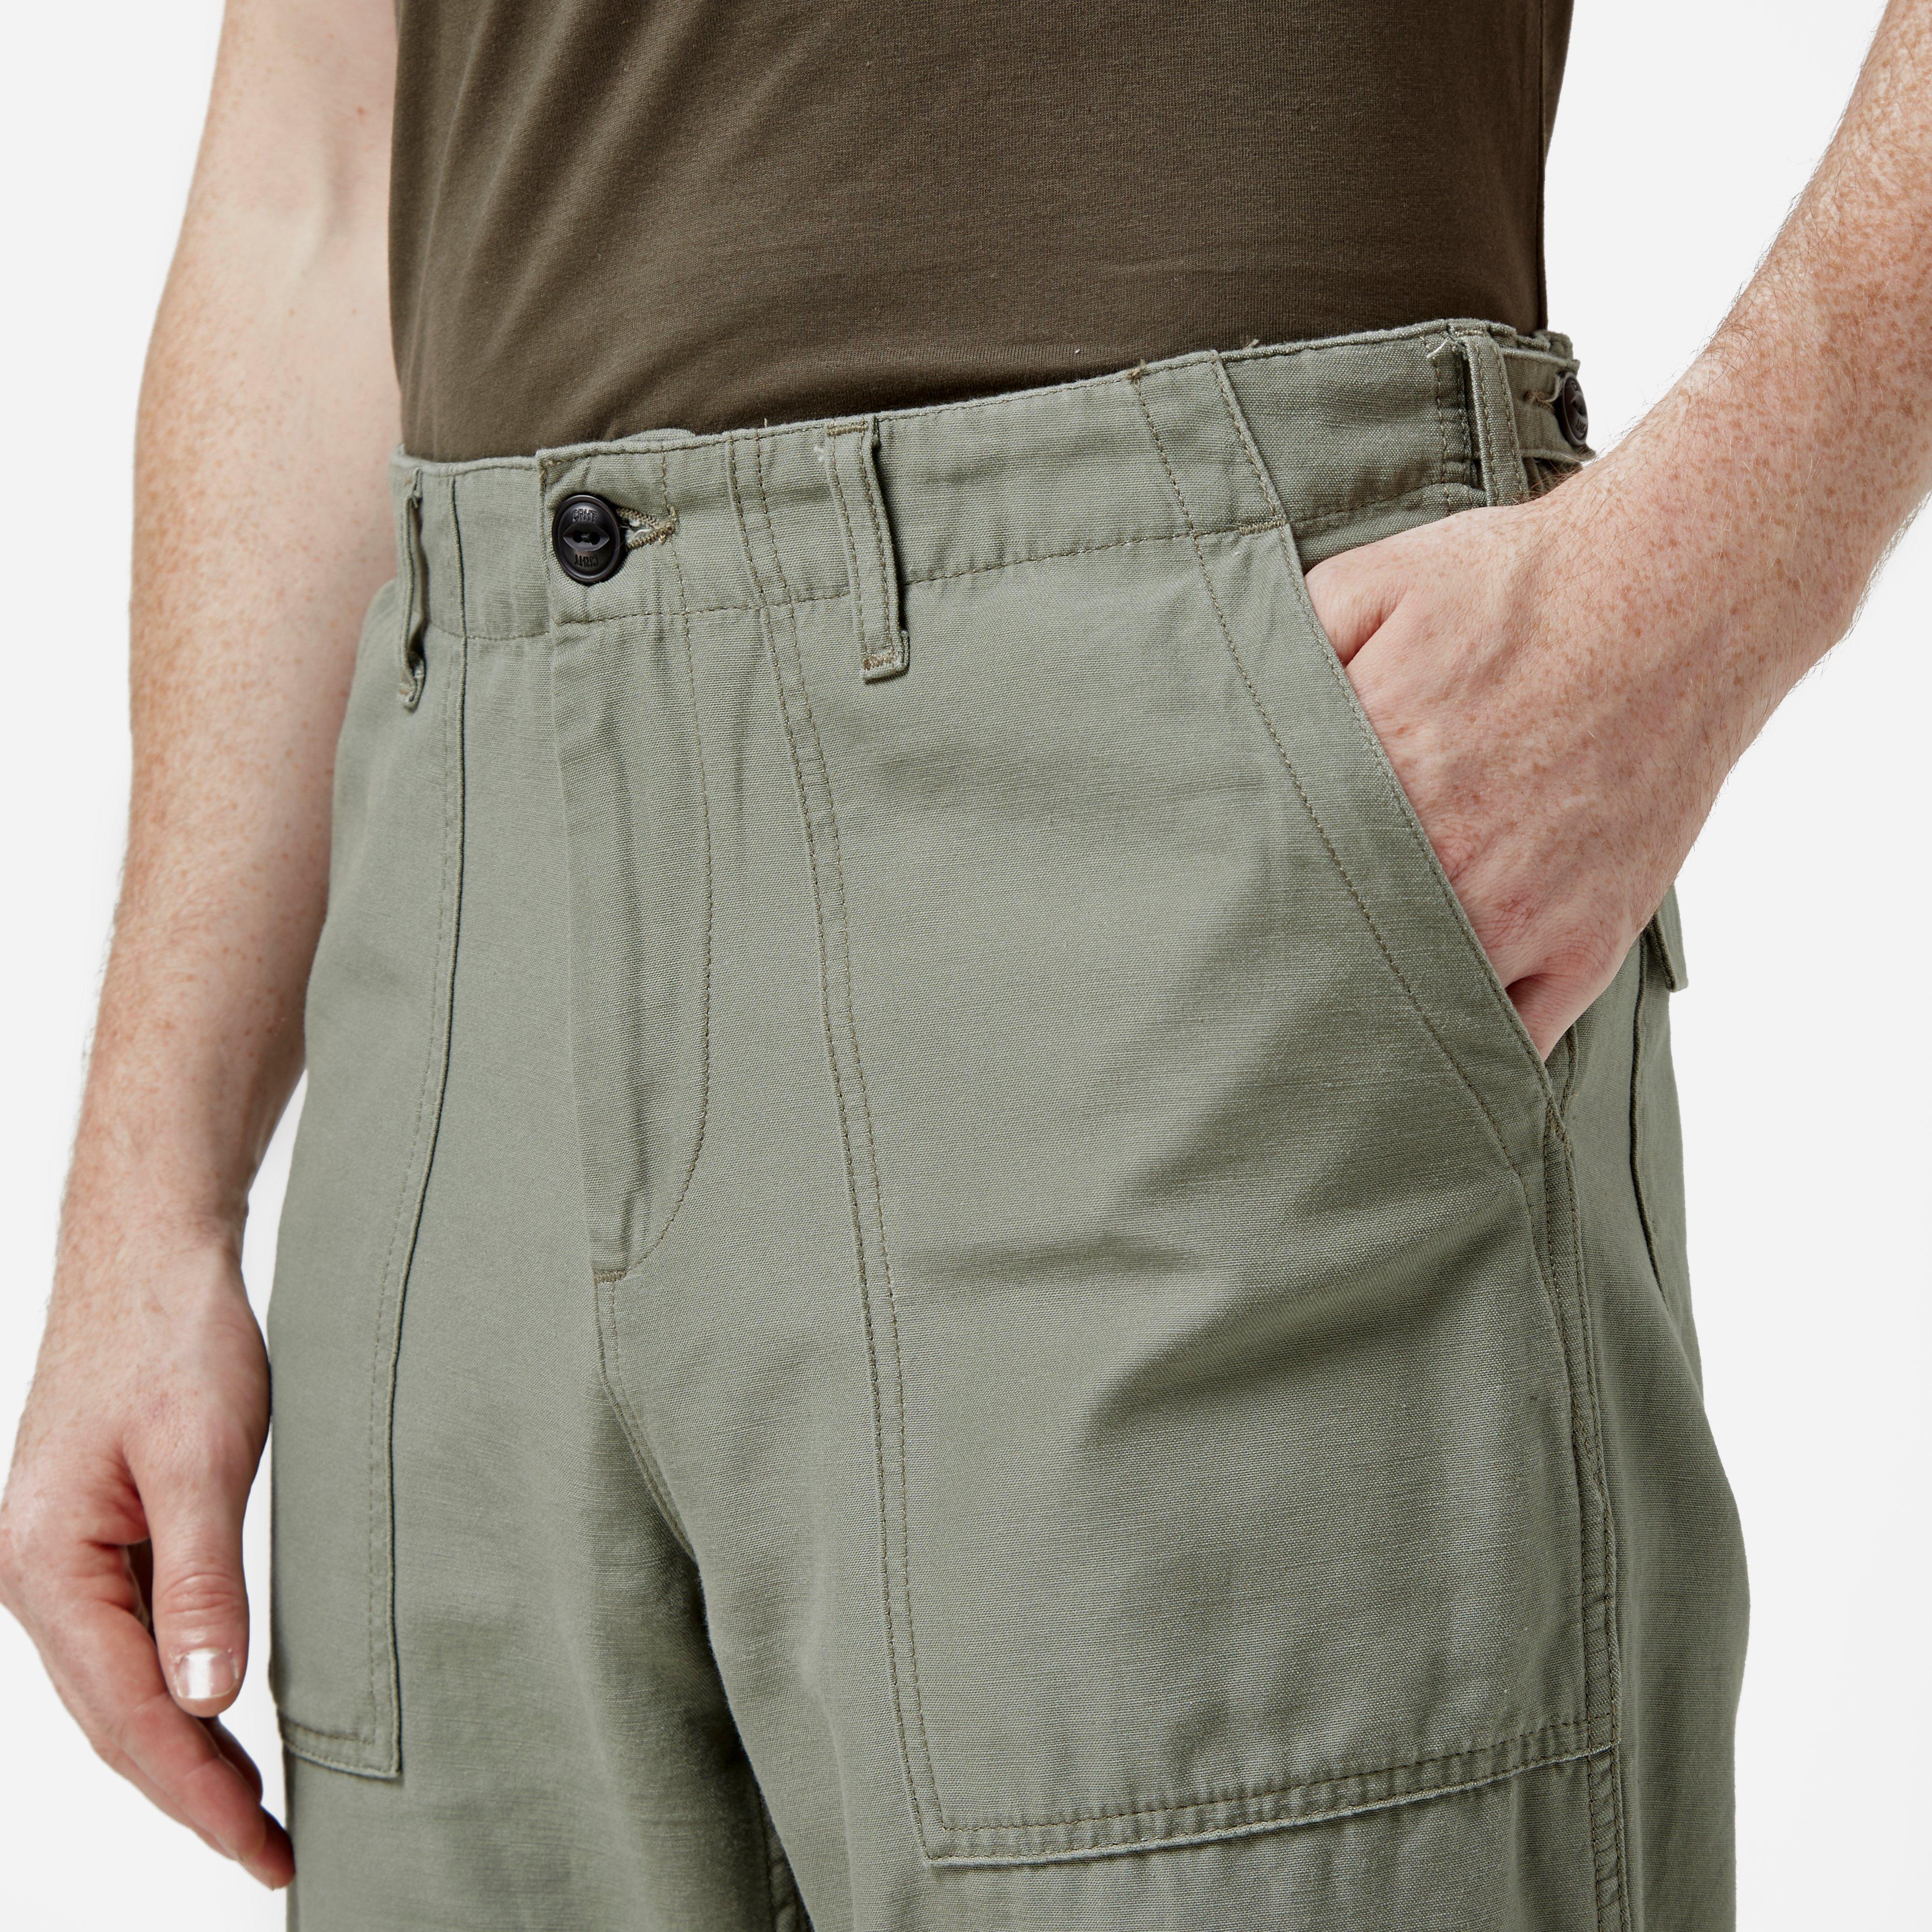 Carhartt WIP Cotton Carhartt Fatigue Pant in Green for Men - Lyst